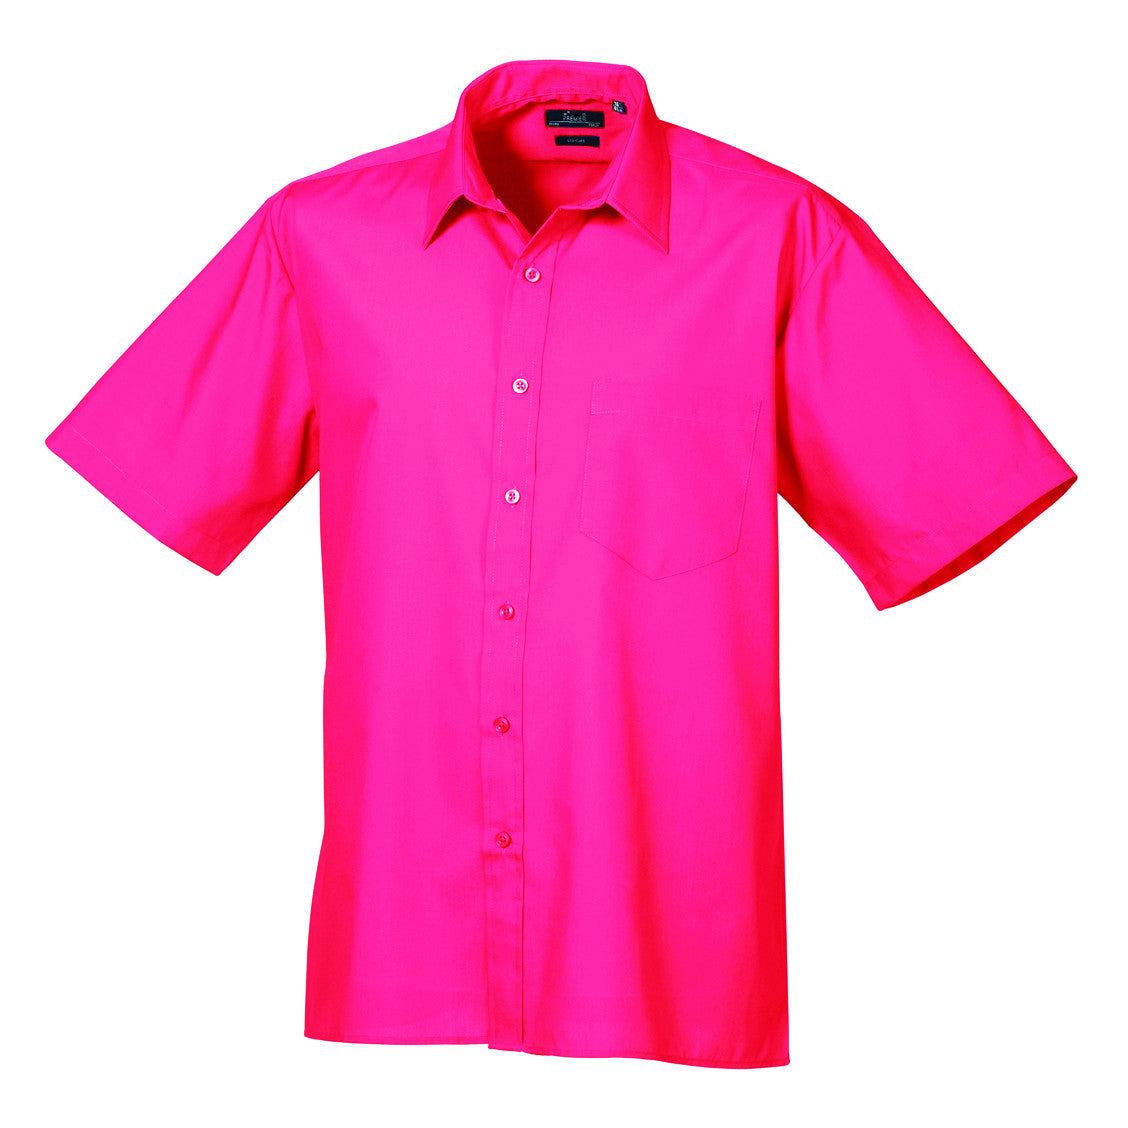 Premier Poplin Shirts (Hot Pink, Pink, Burgundy, Red, Strawberry) - peterdrew.com
 - 7